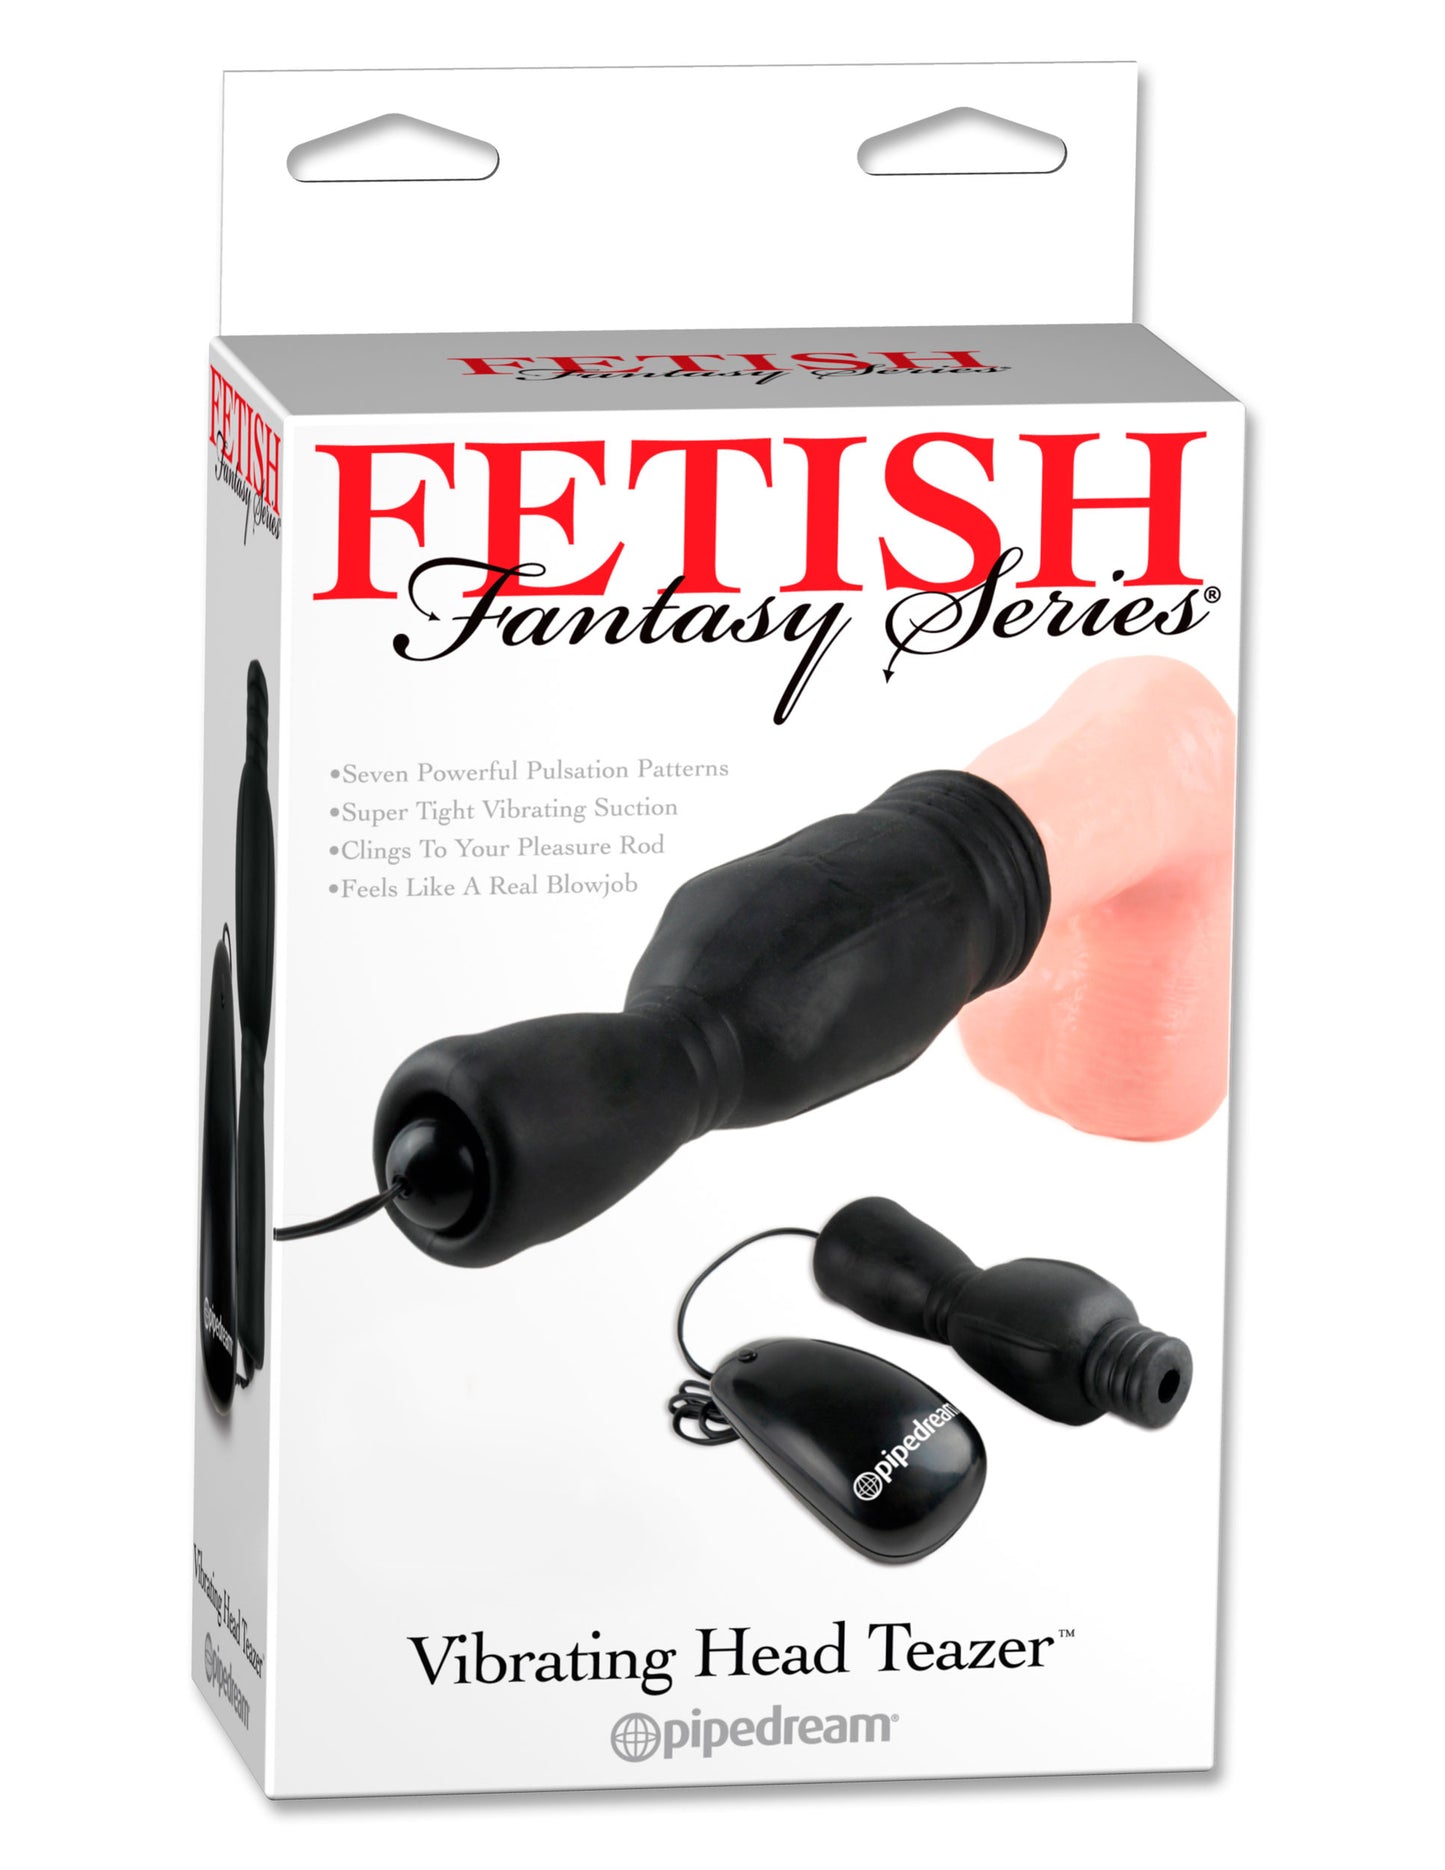 Fetish Fantasy Series Vibrating Head Teazer - Black PD2117-23